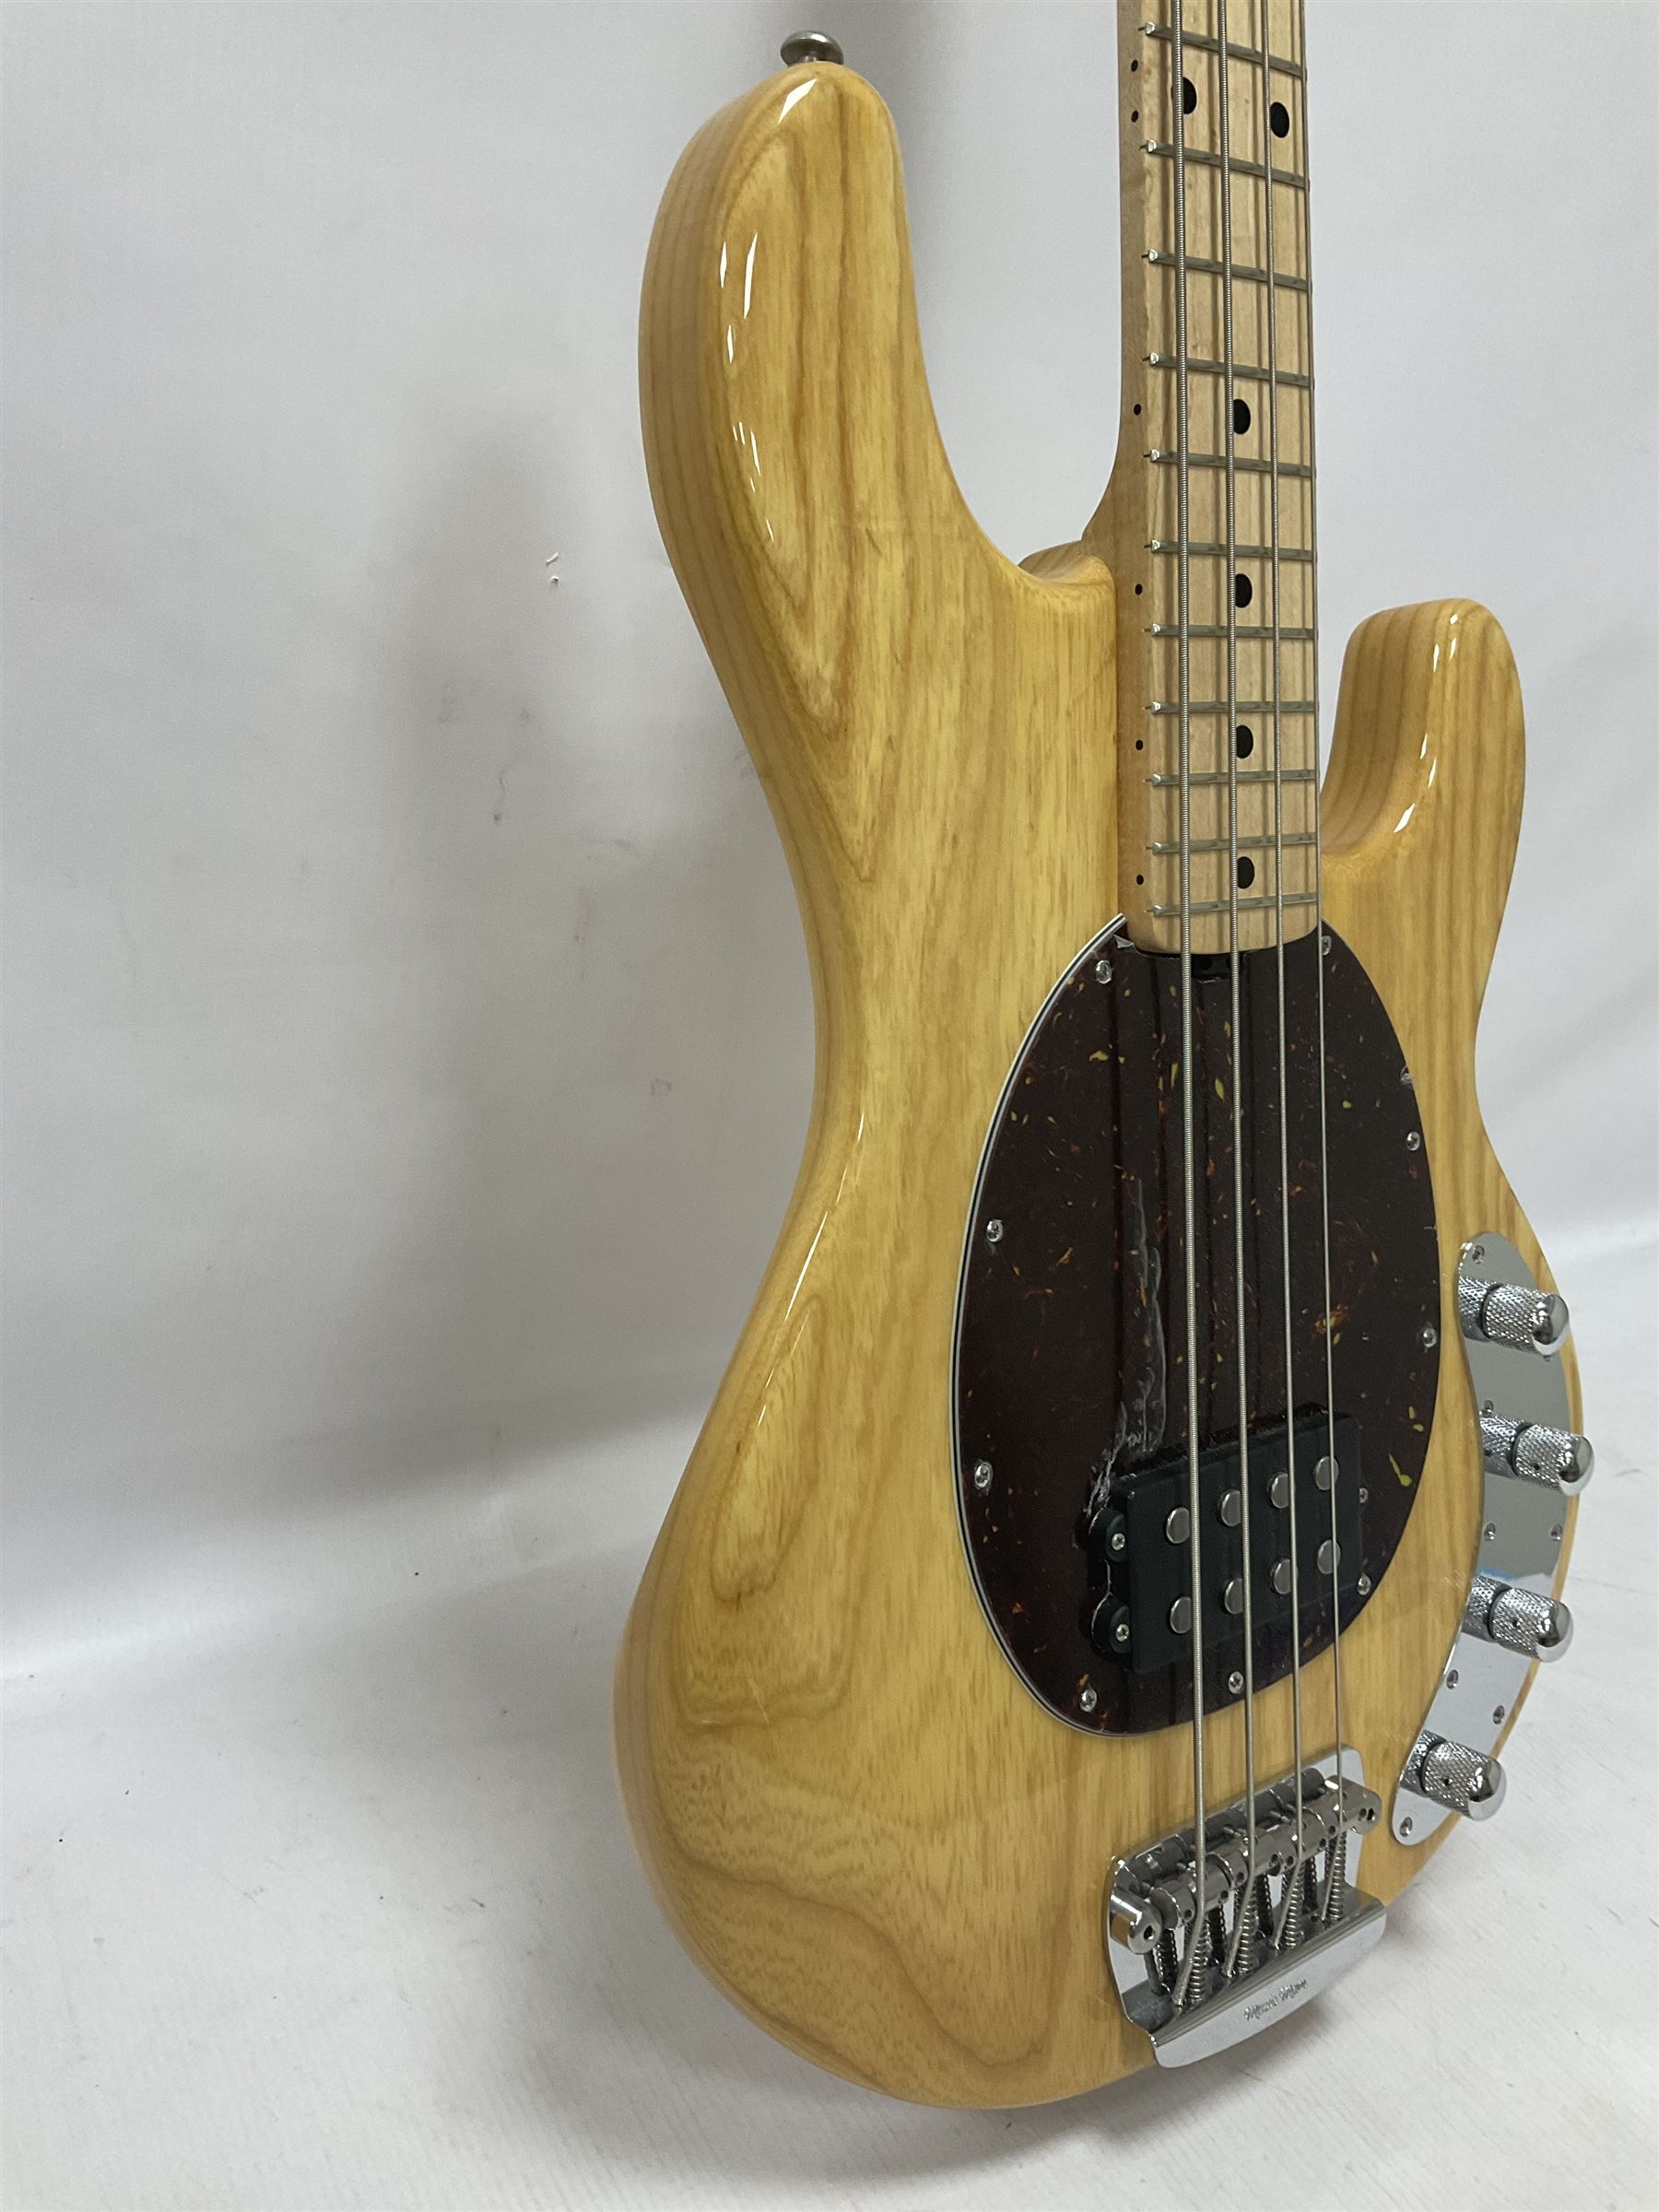 Ernie Ball Music Man Sting Ray 4 string bass guitar - Image 10 of 24